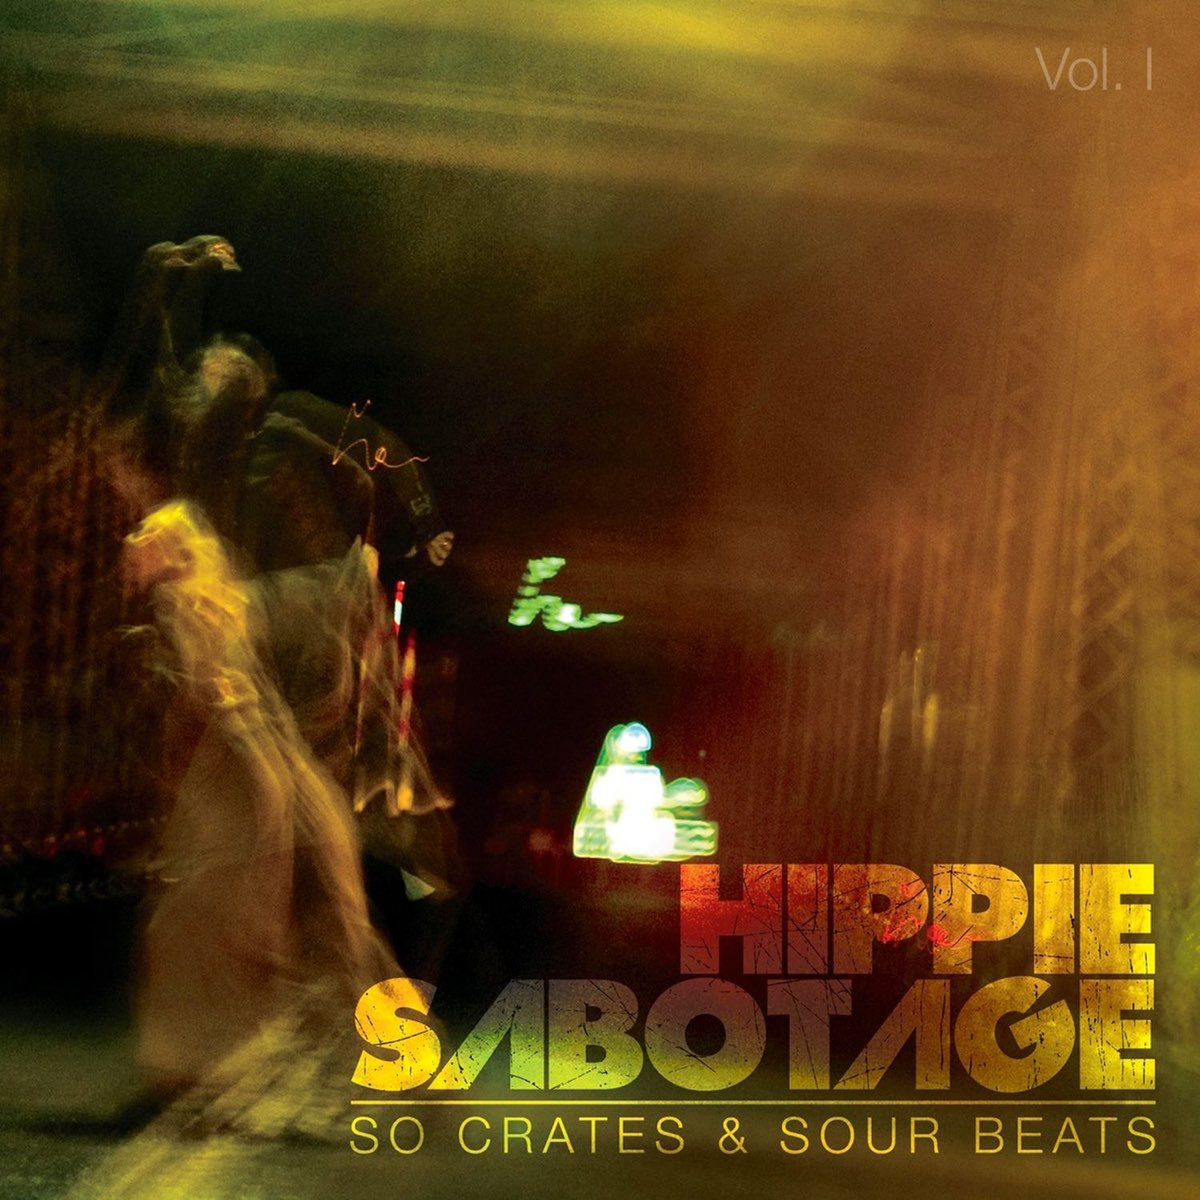 Vol. 1 par Hippie Sabotage sur Apple Music